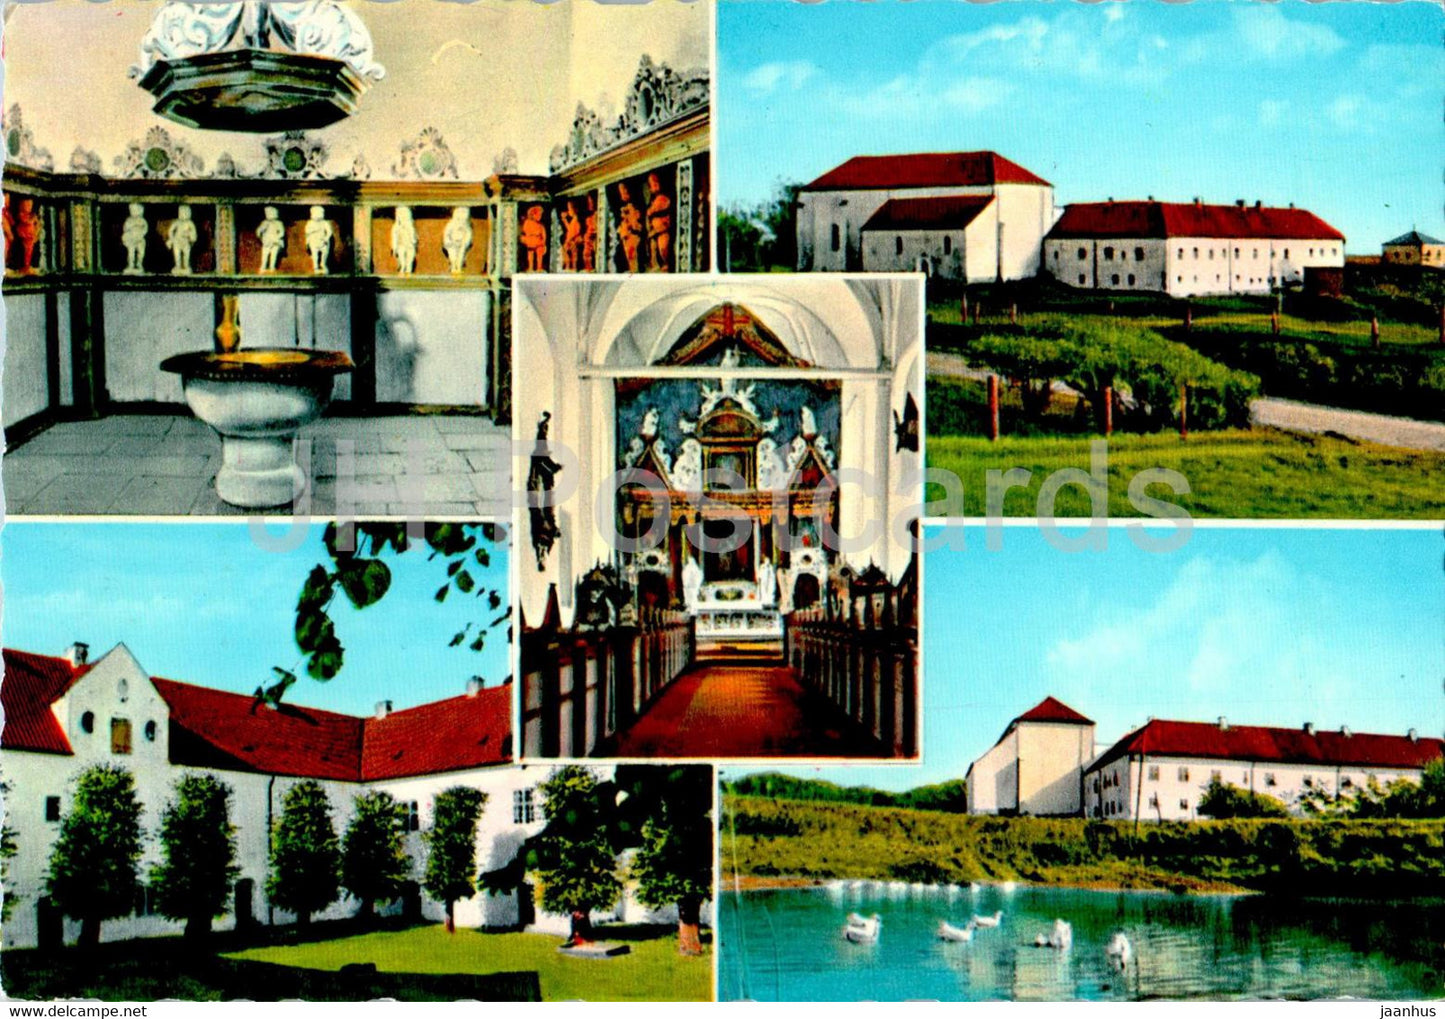 Borglumkloster - monastery - multiview - 1136 - Sweden - unused - JH Postcards